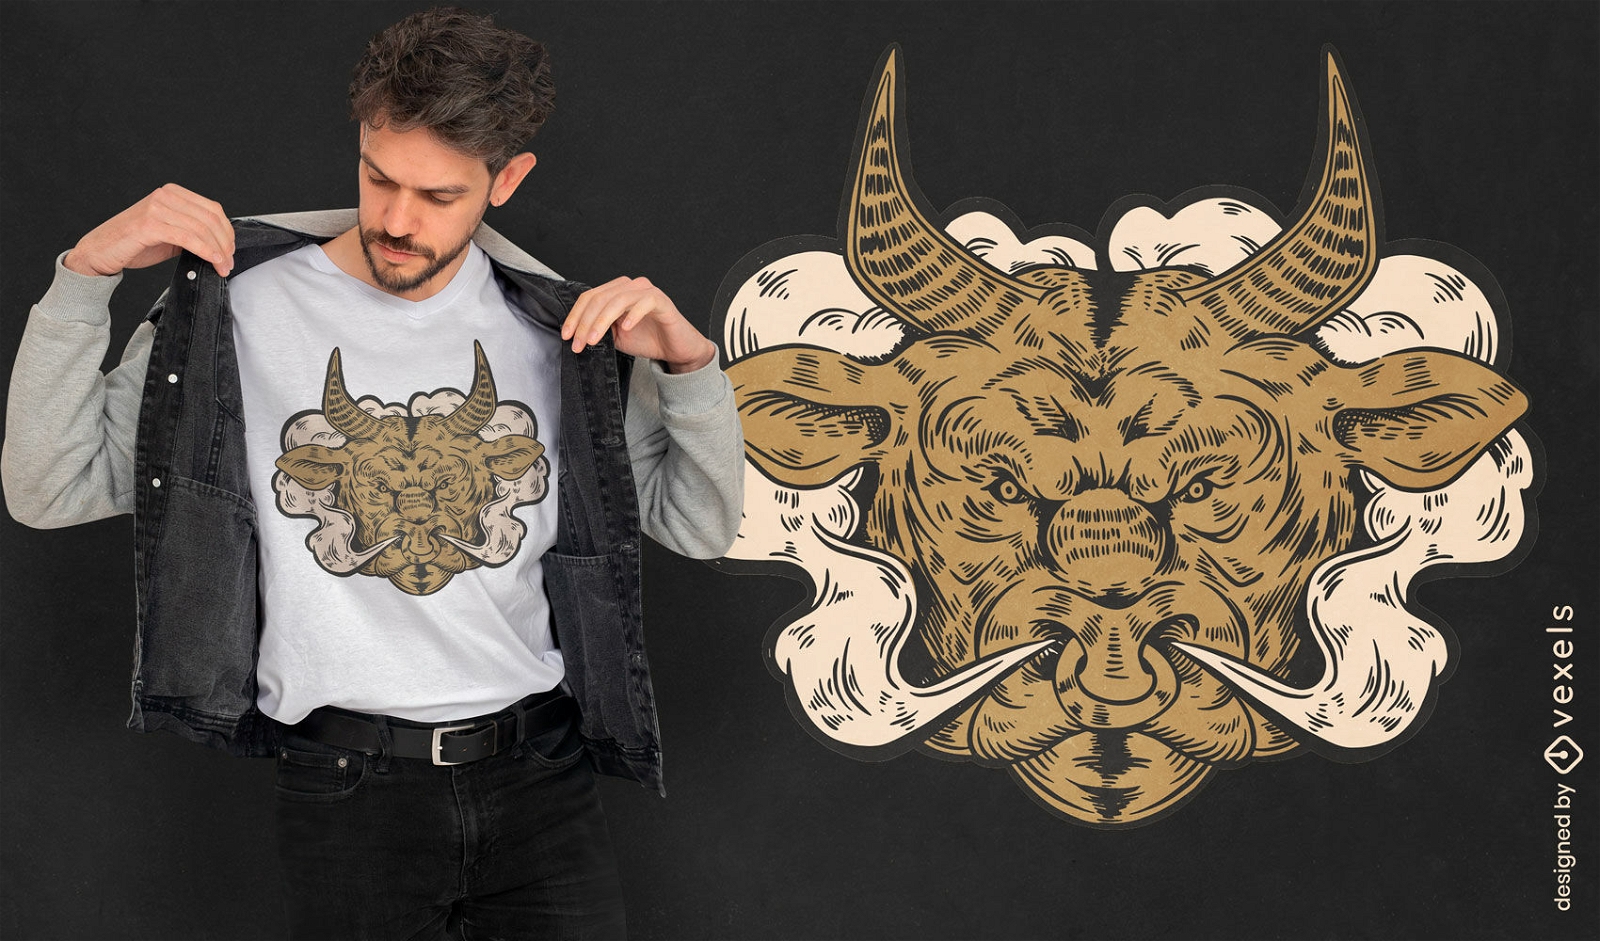 Bull animal head illustration t-shirt design